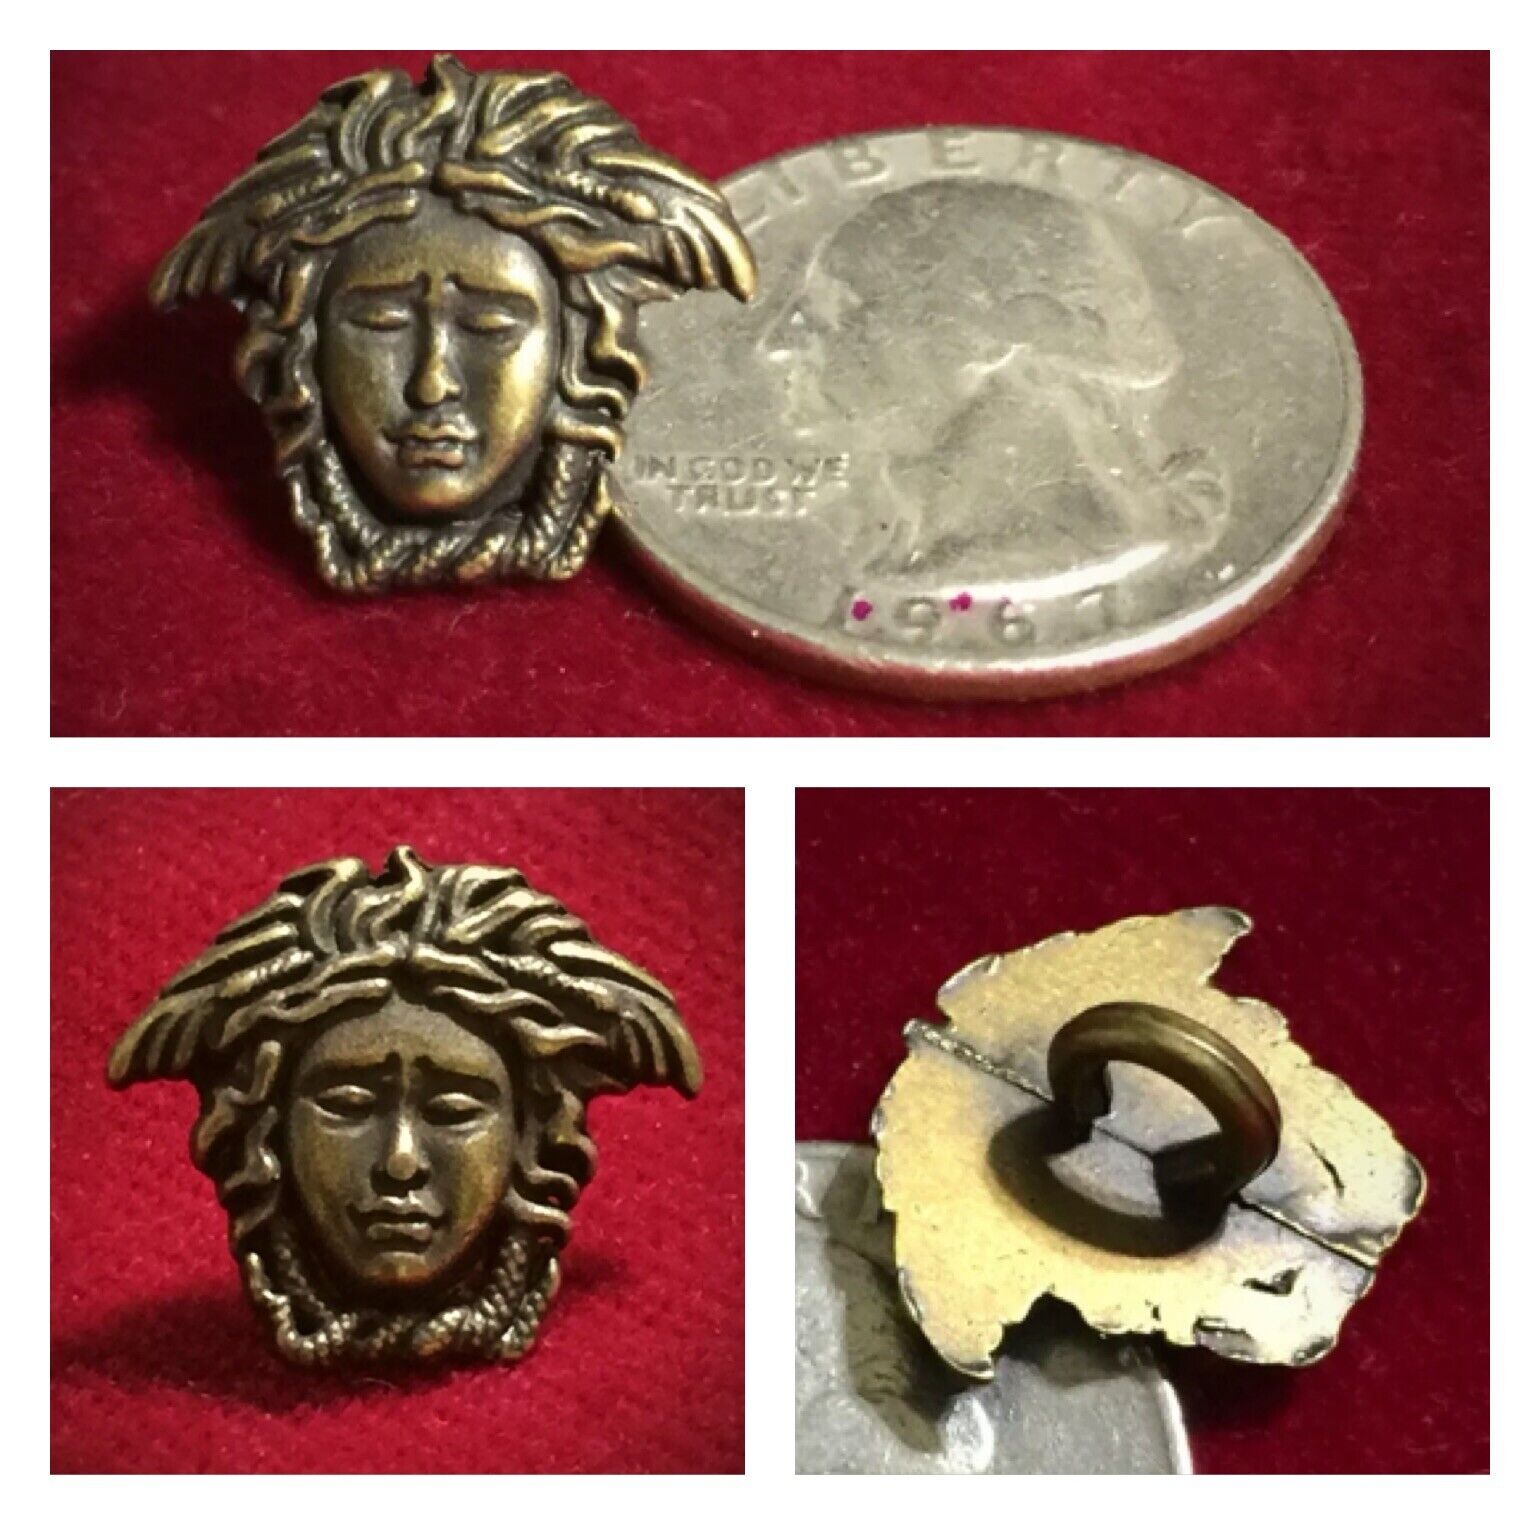 One (1) Antique Brass Metal Button of the Greek Mythology Medusa Snake Head